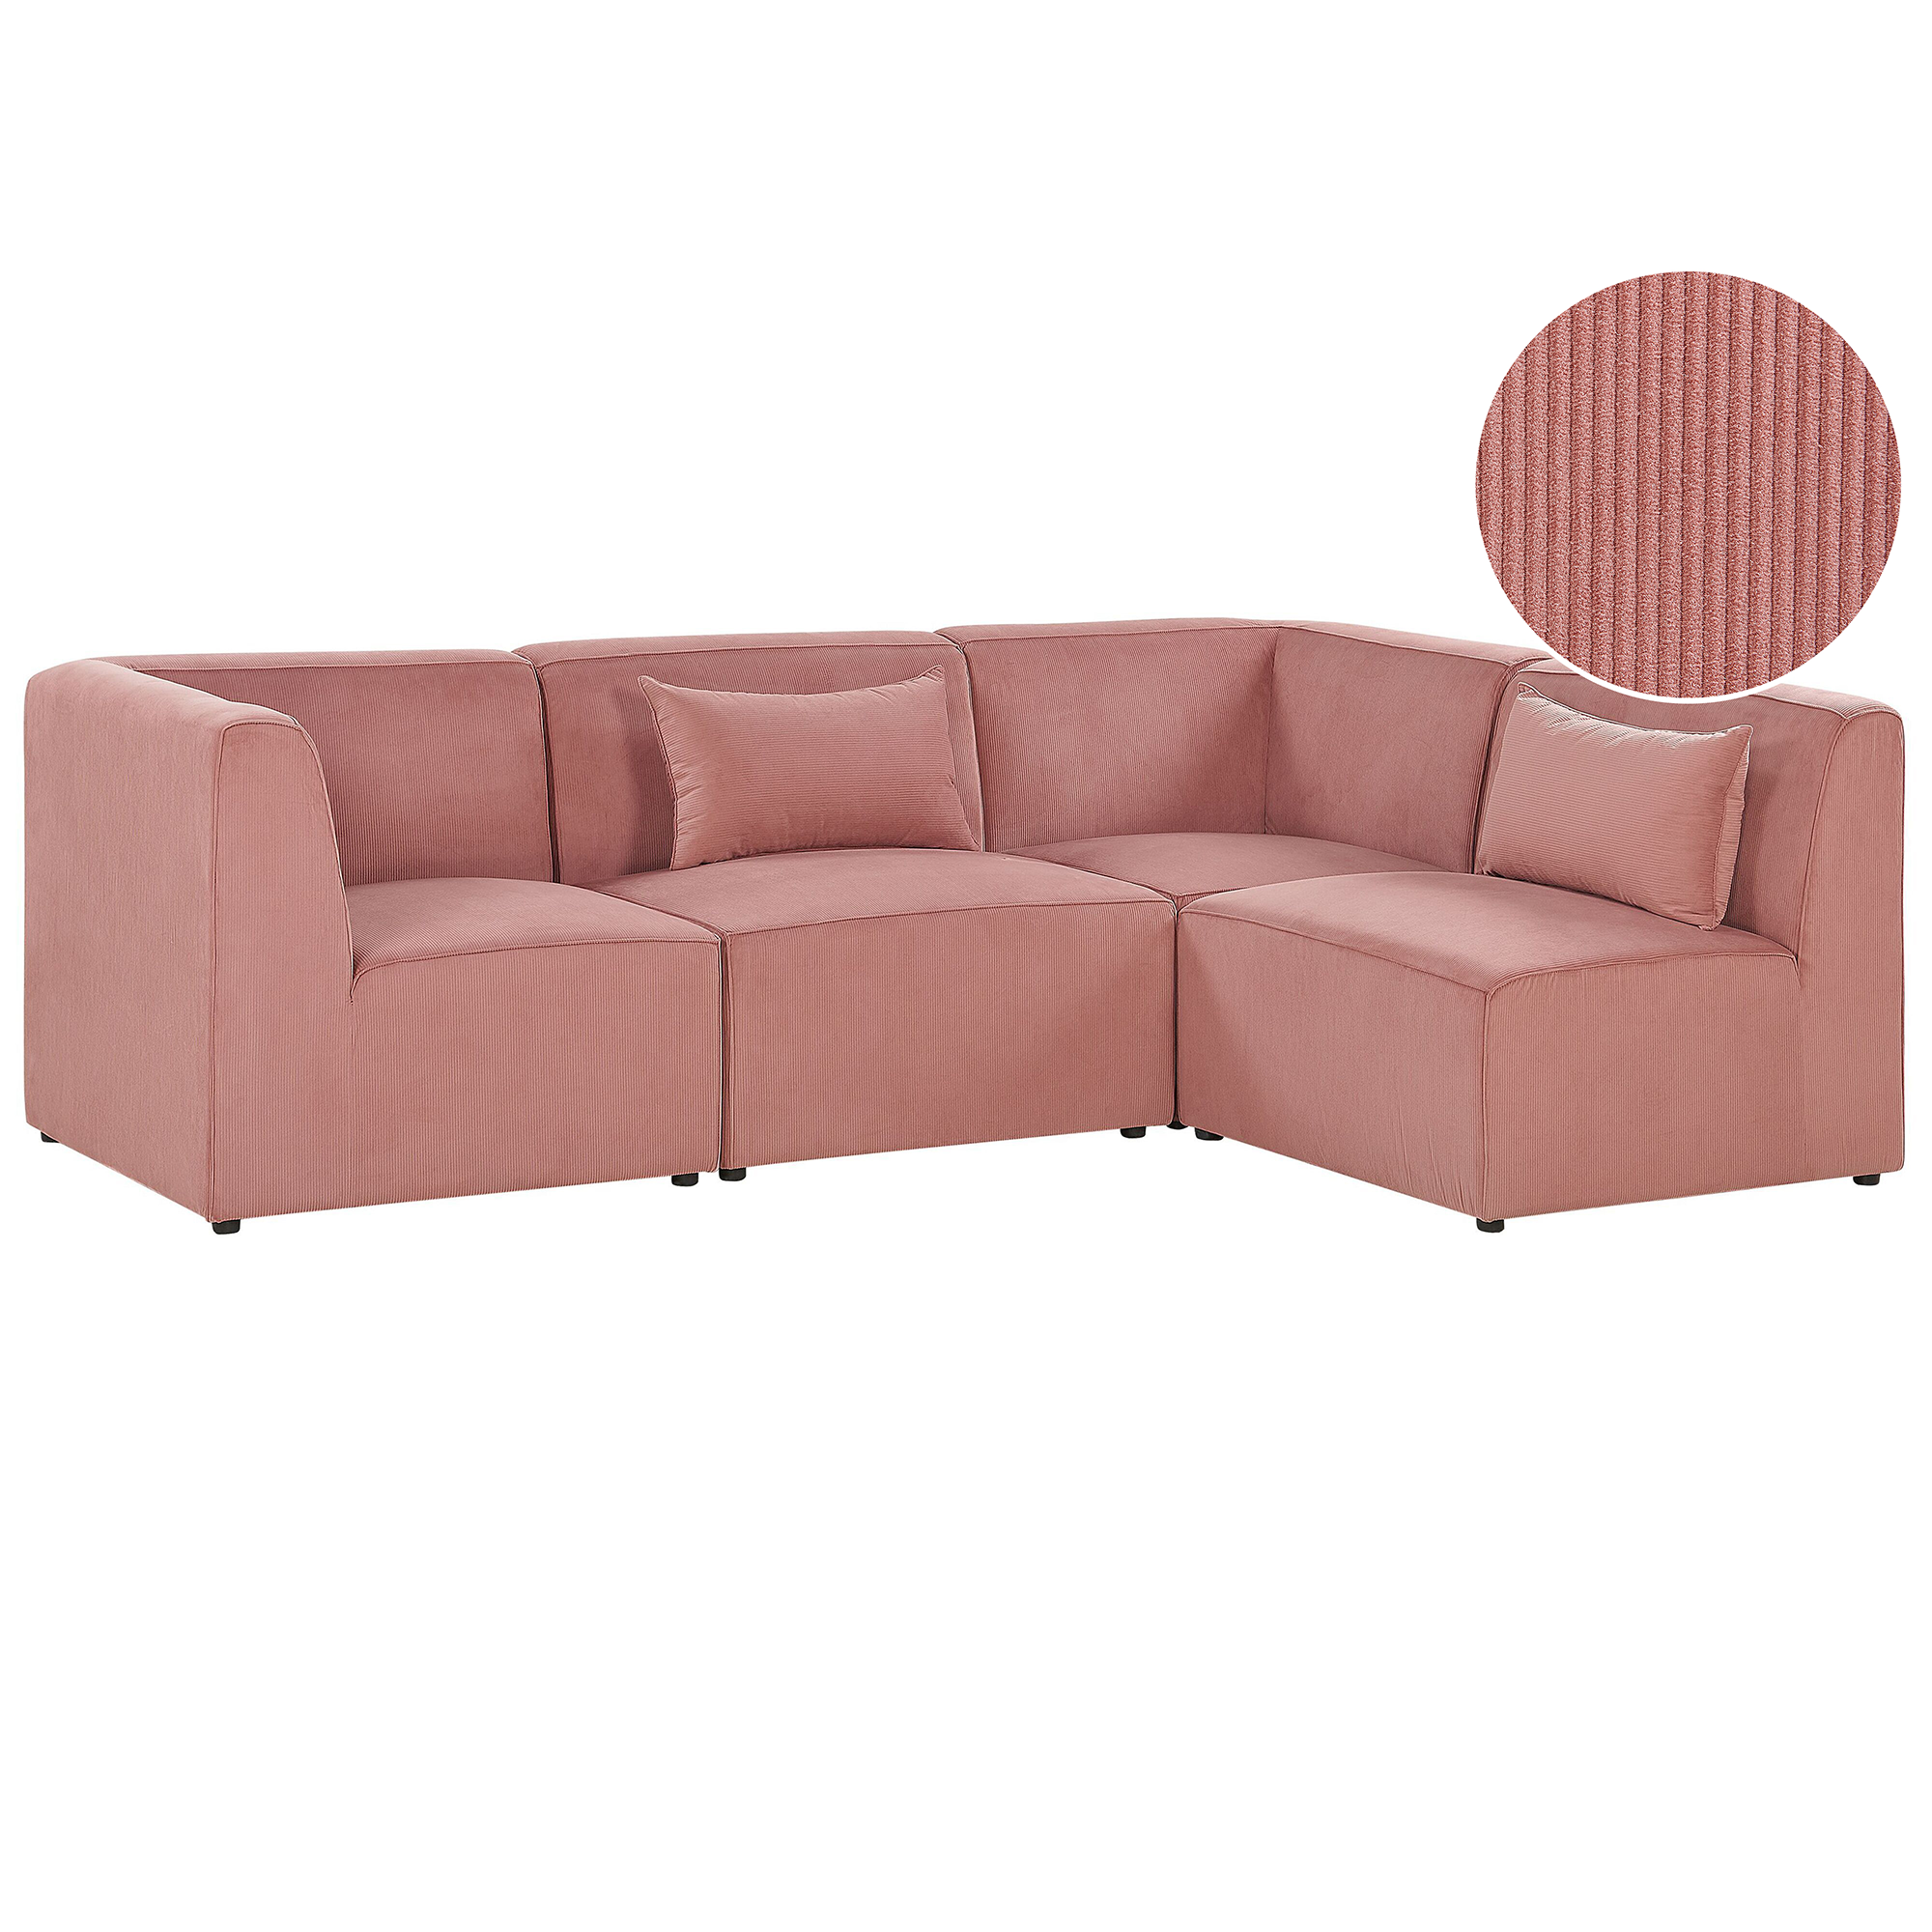 Beliani Modular Corner Sofa Pink Corduroy Left Hand 4 Seater Sectional Sofa L-Shaped Modern Design